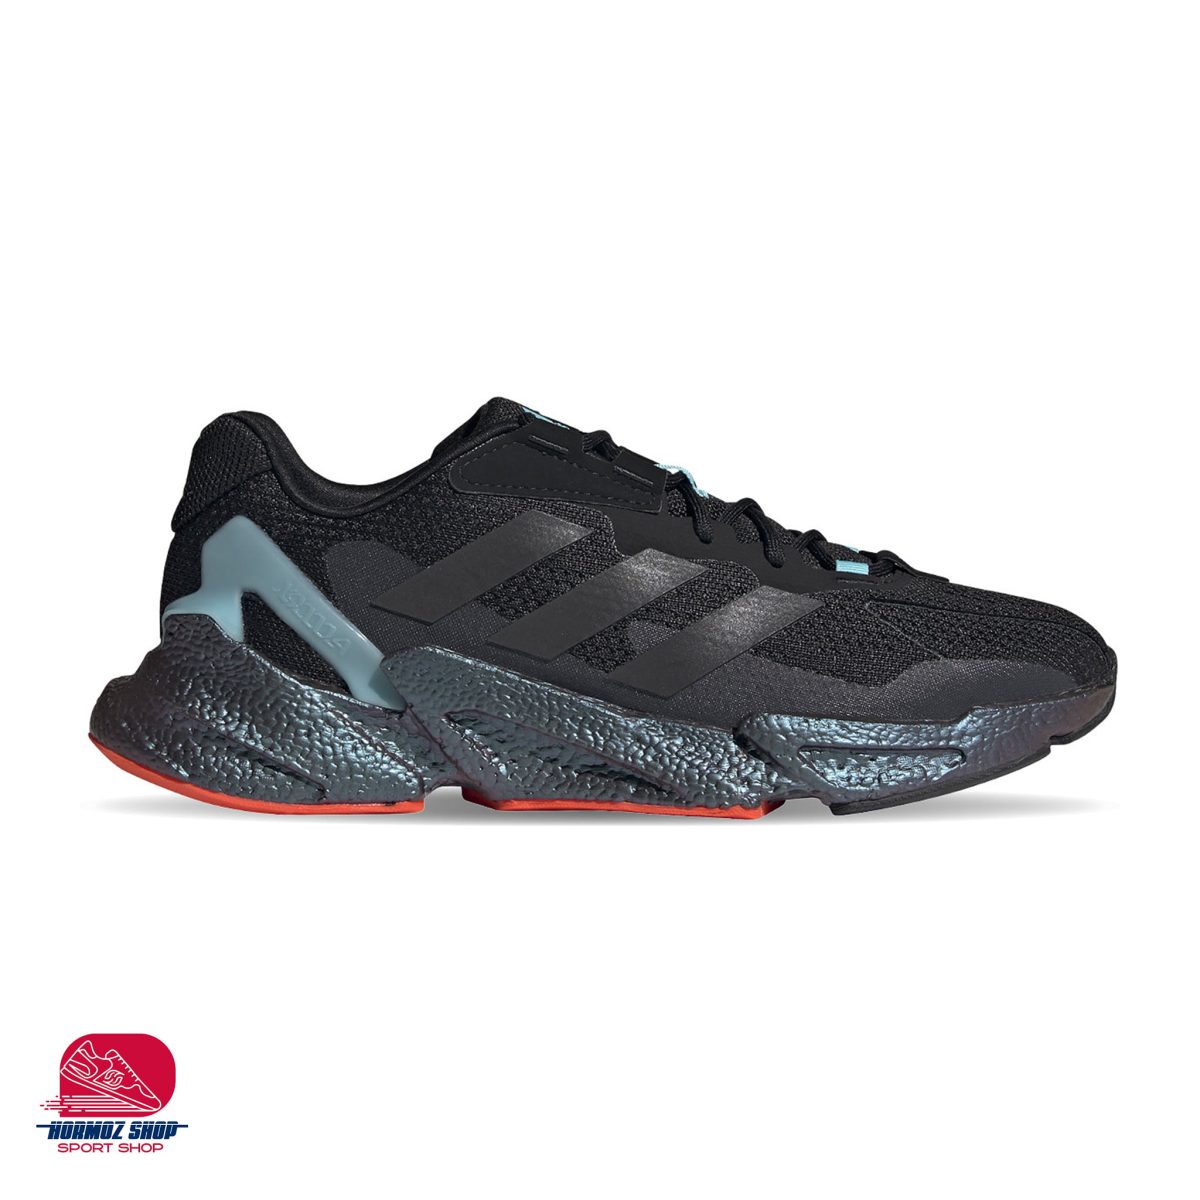 Adidas S23665 1